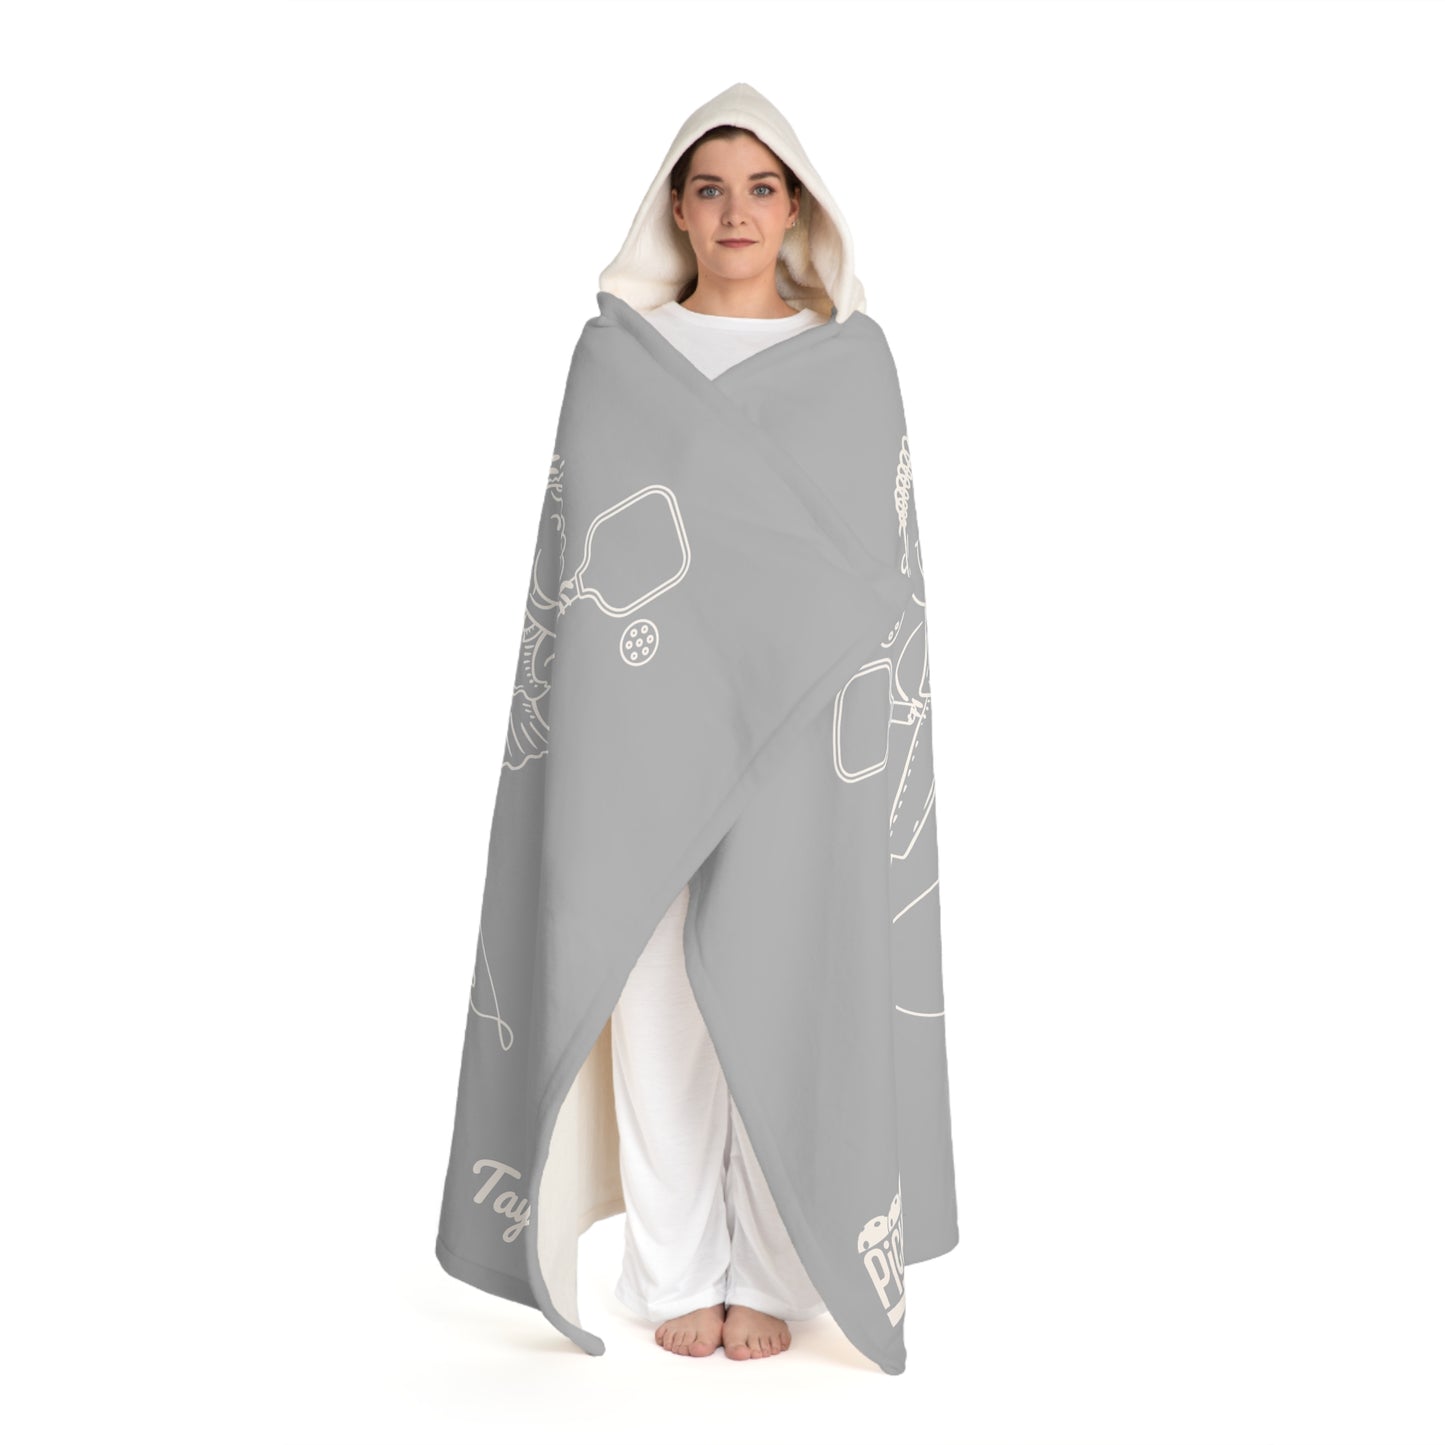 Picklemania Hooded Sherpa Fleece Blanket - customize name